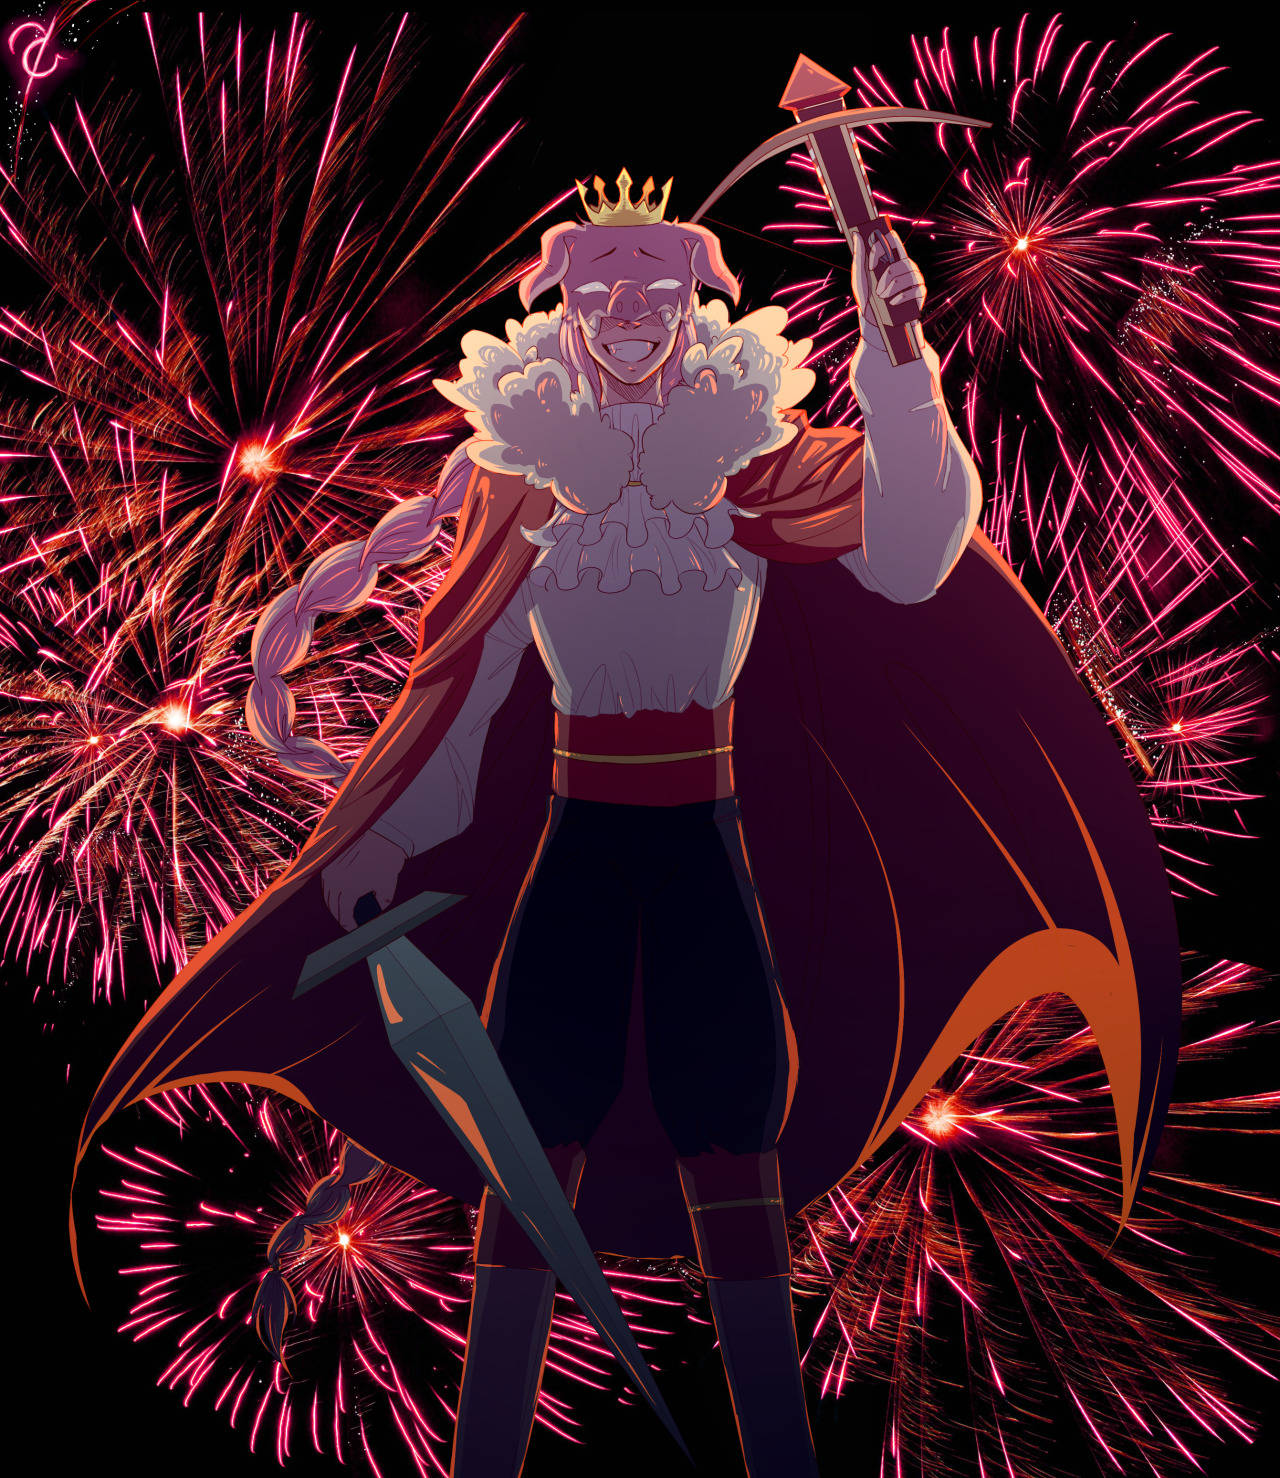 Anime Technoblade Under Fireworks Background